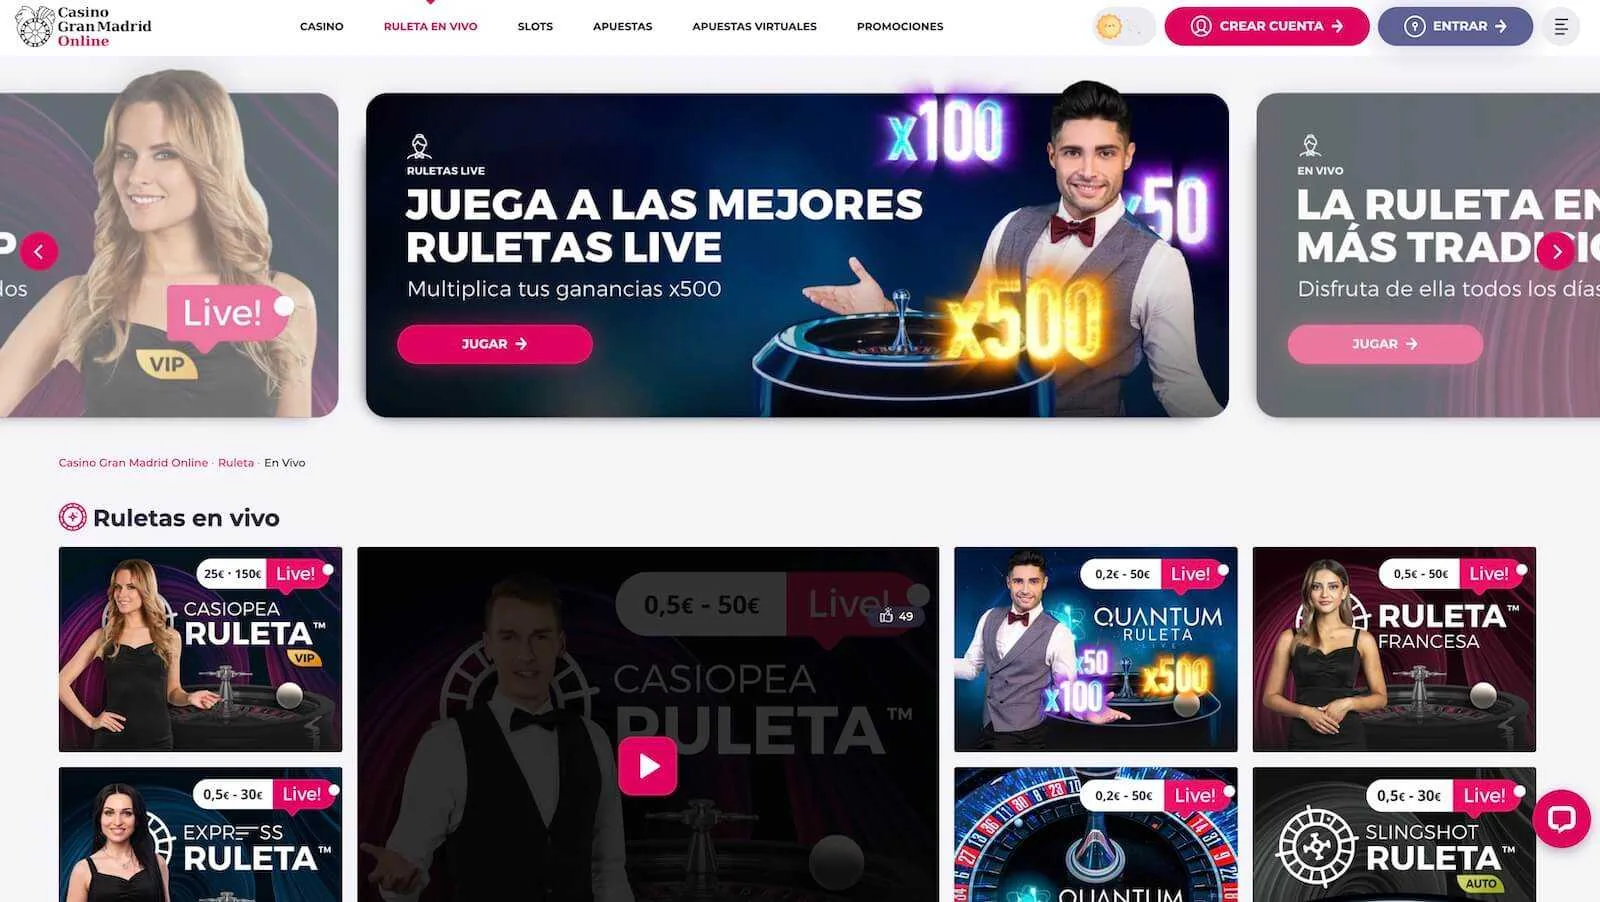 Casino Gran Madrid App movil y Casino en vivo